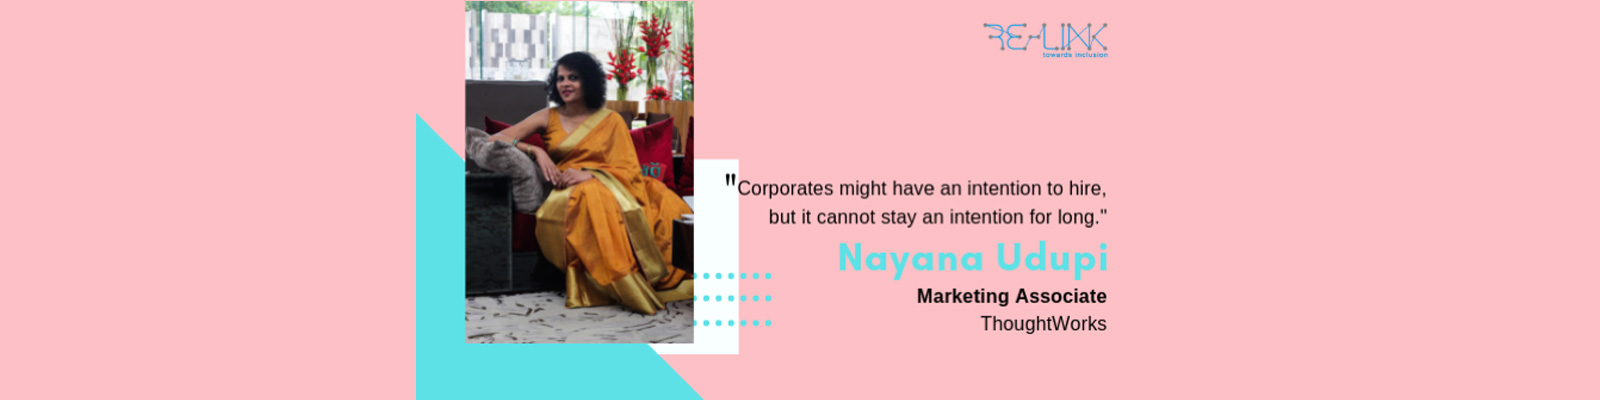 Nayana udupi marketing associate thoughtworks